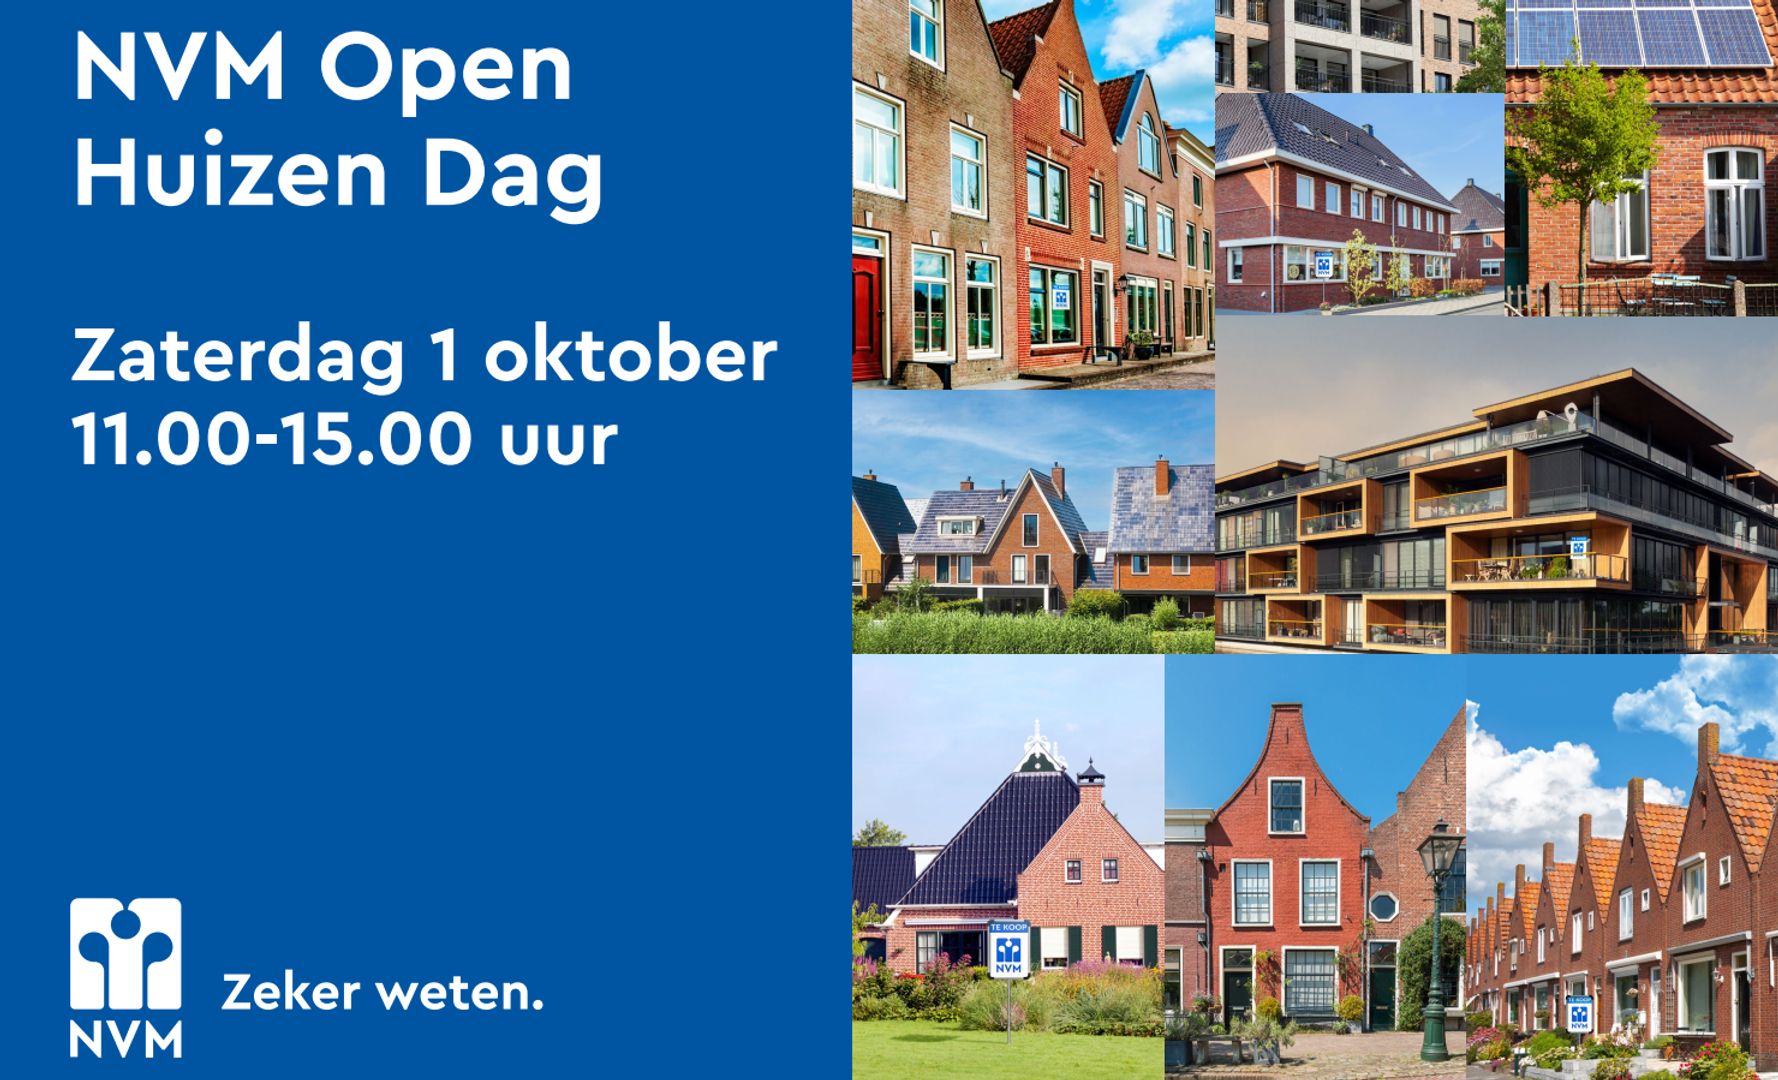 NVM Open Huizen Dag | Zaterdag 1 oktober